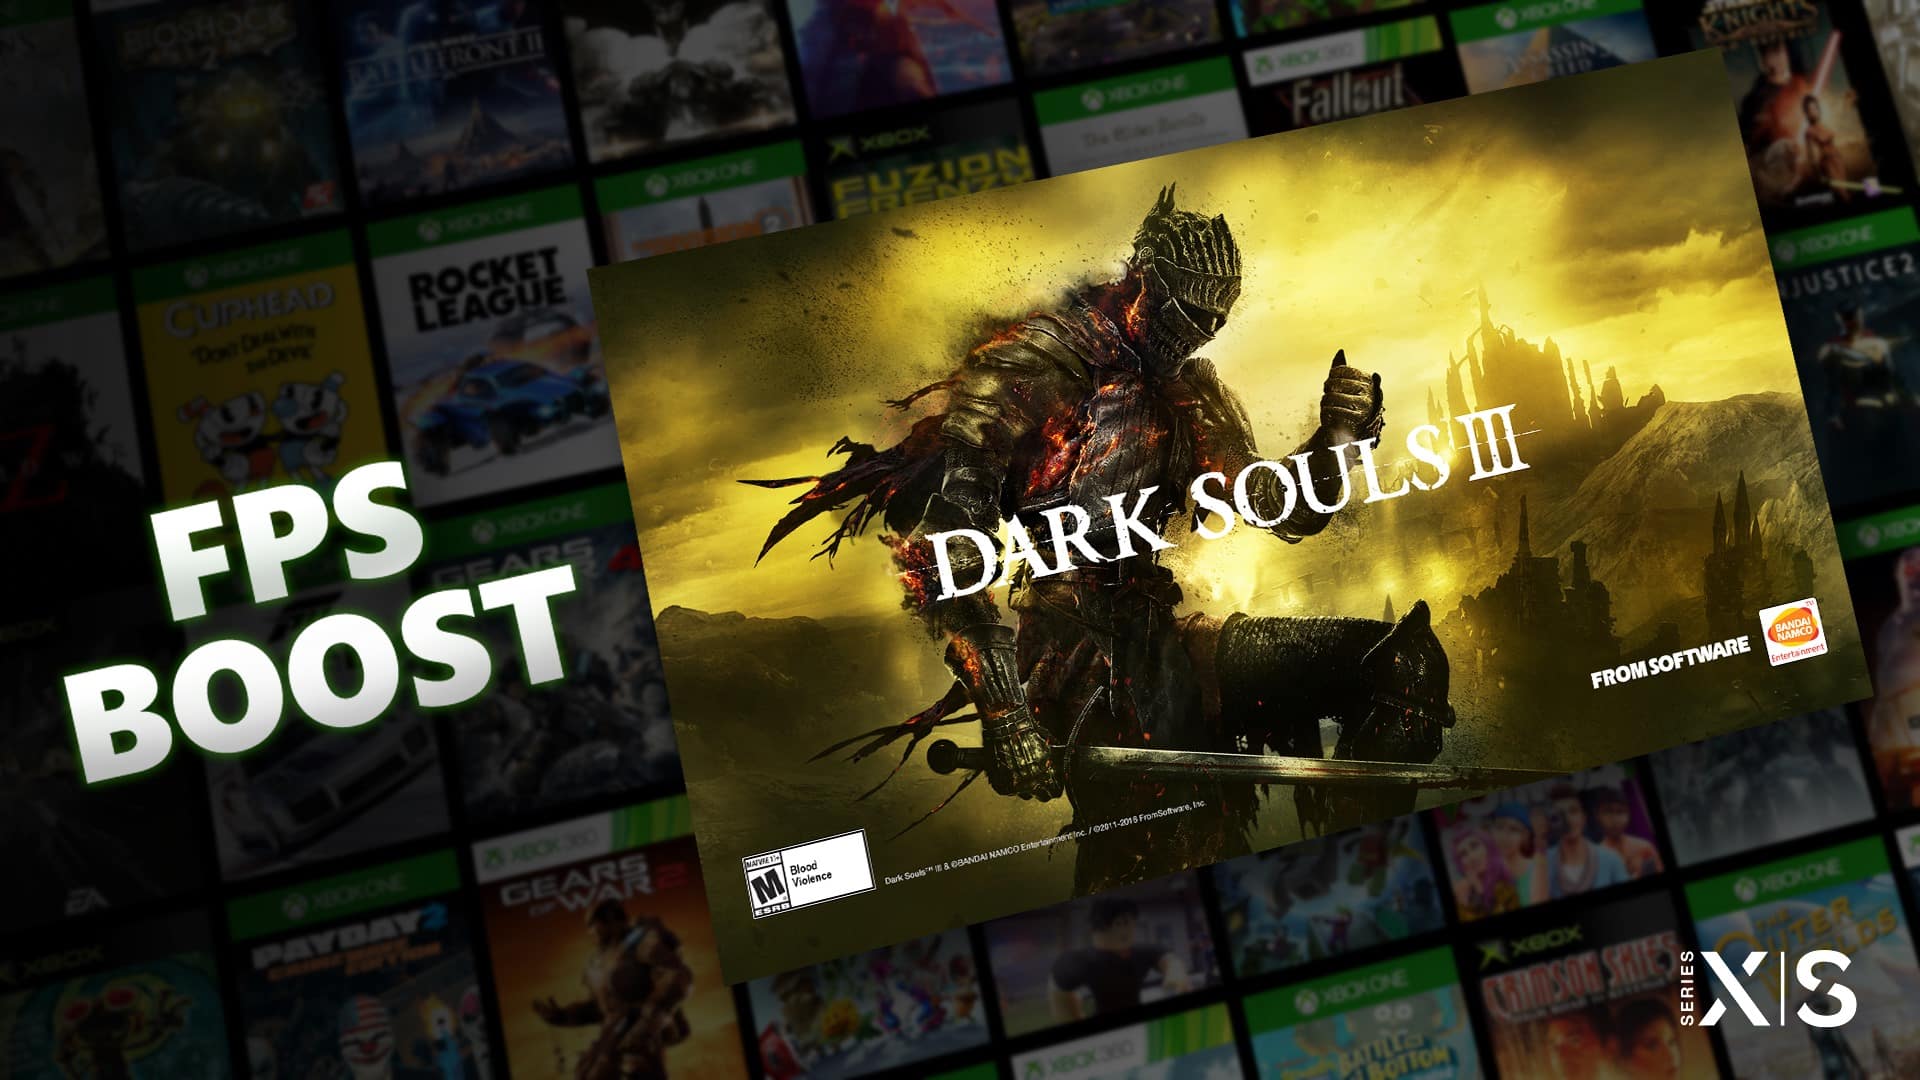 Dark Souls 3 gets FPS Boost today